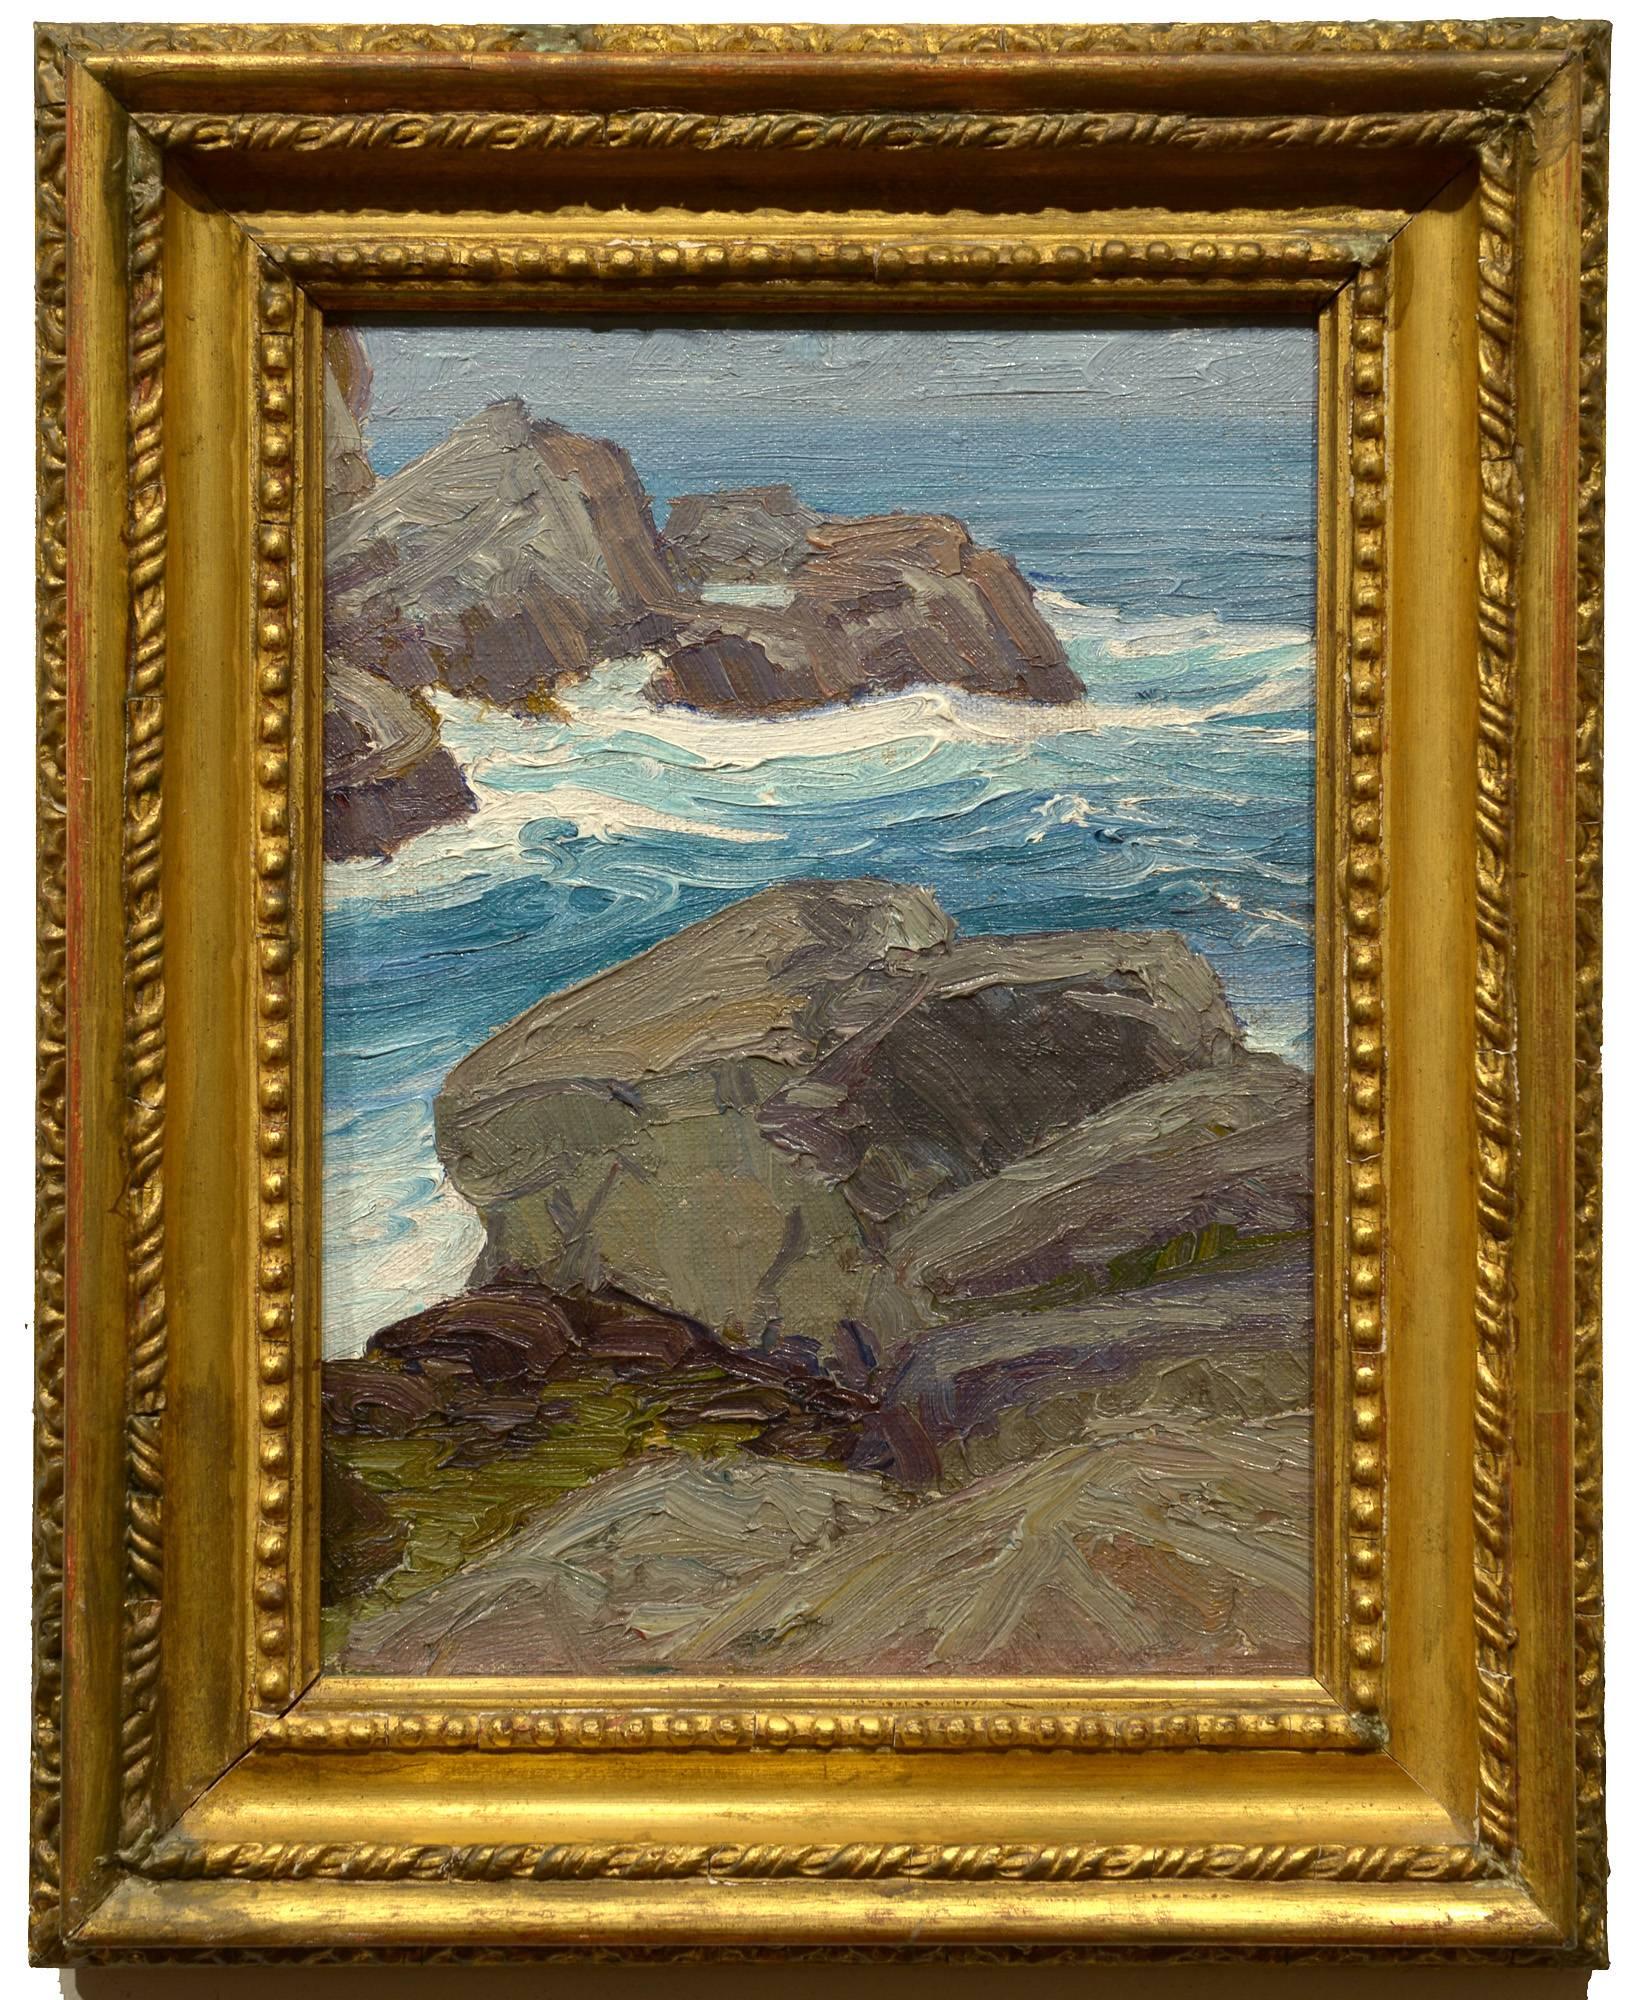 Rising Seas, Monhegan - Painting by Theophile Schneider